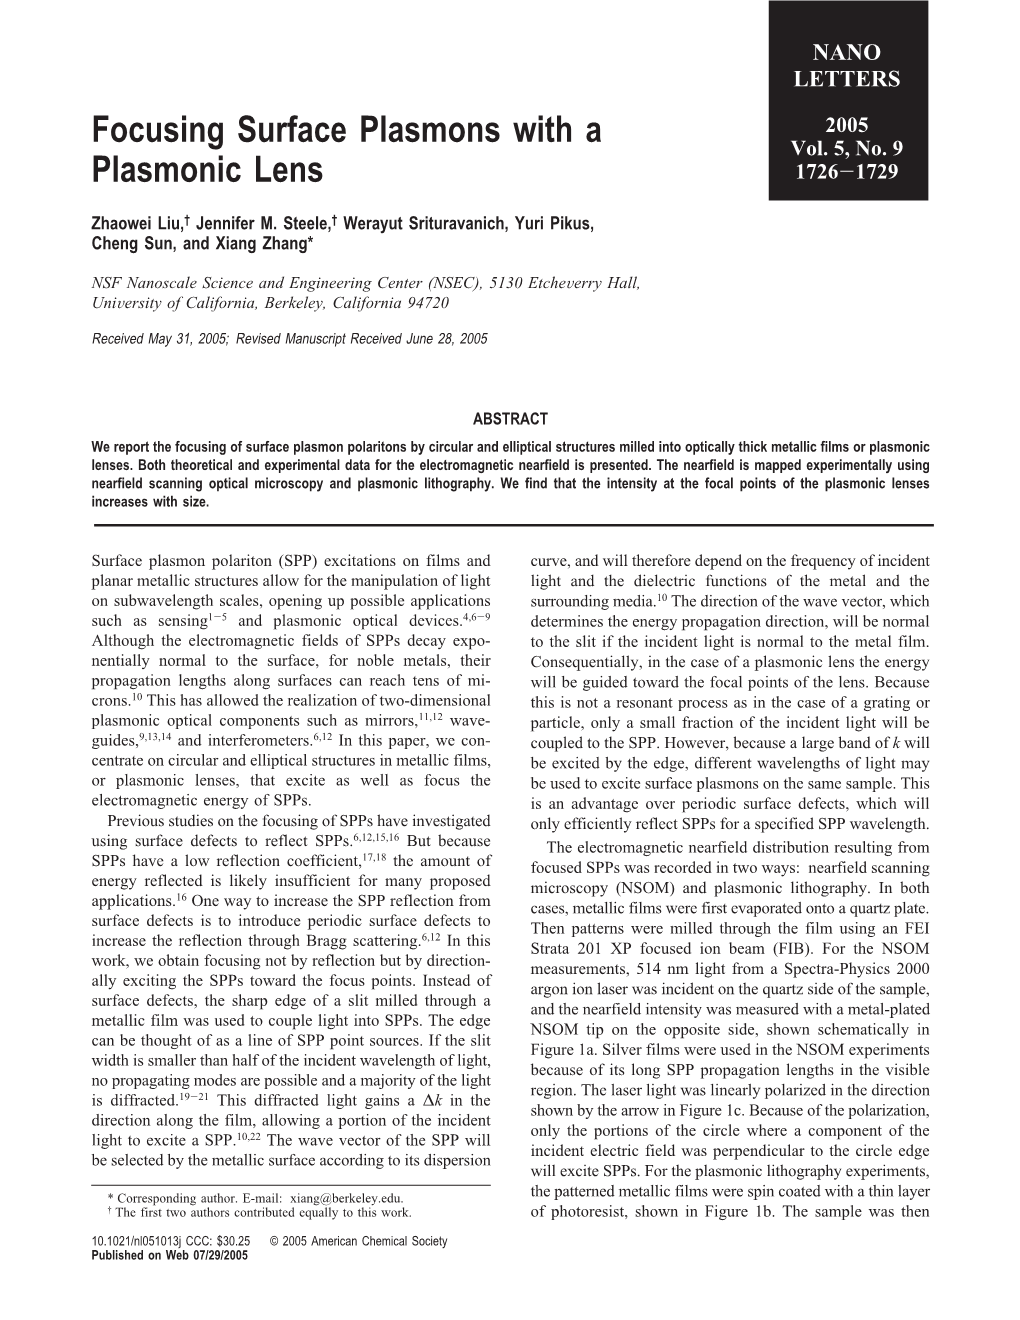 Focusing Surface Plasmons with a Plasmonic Lens